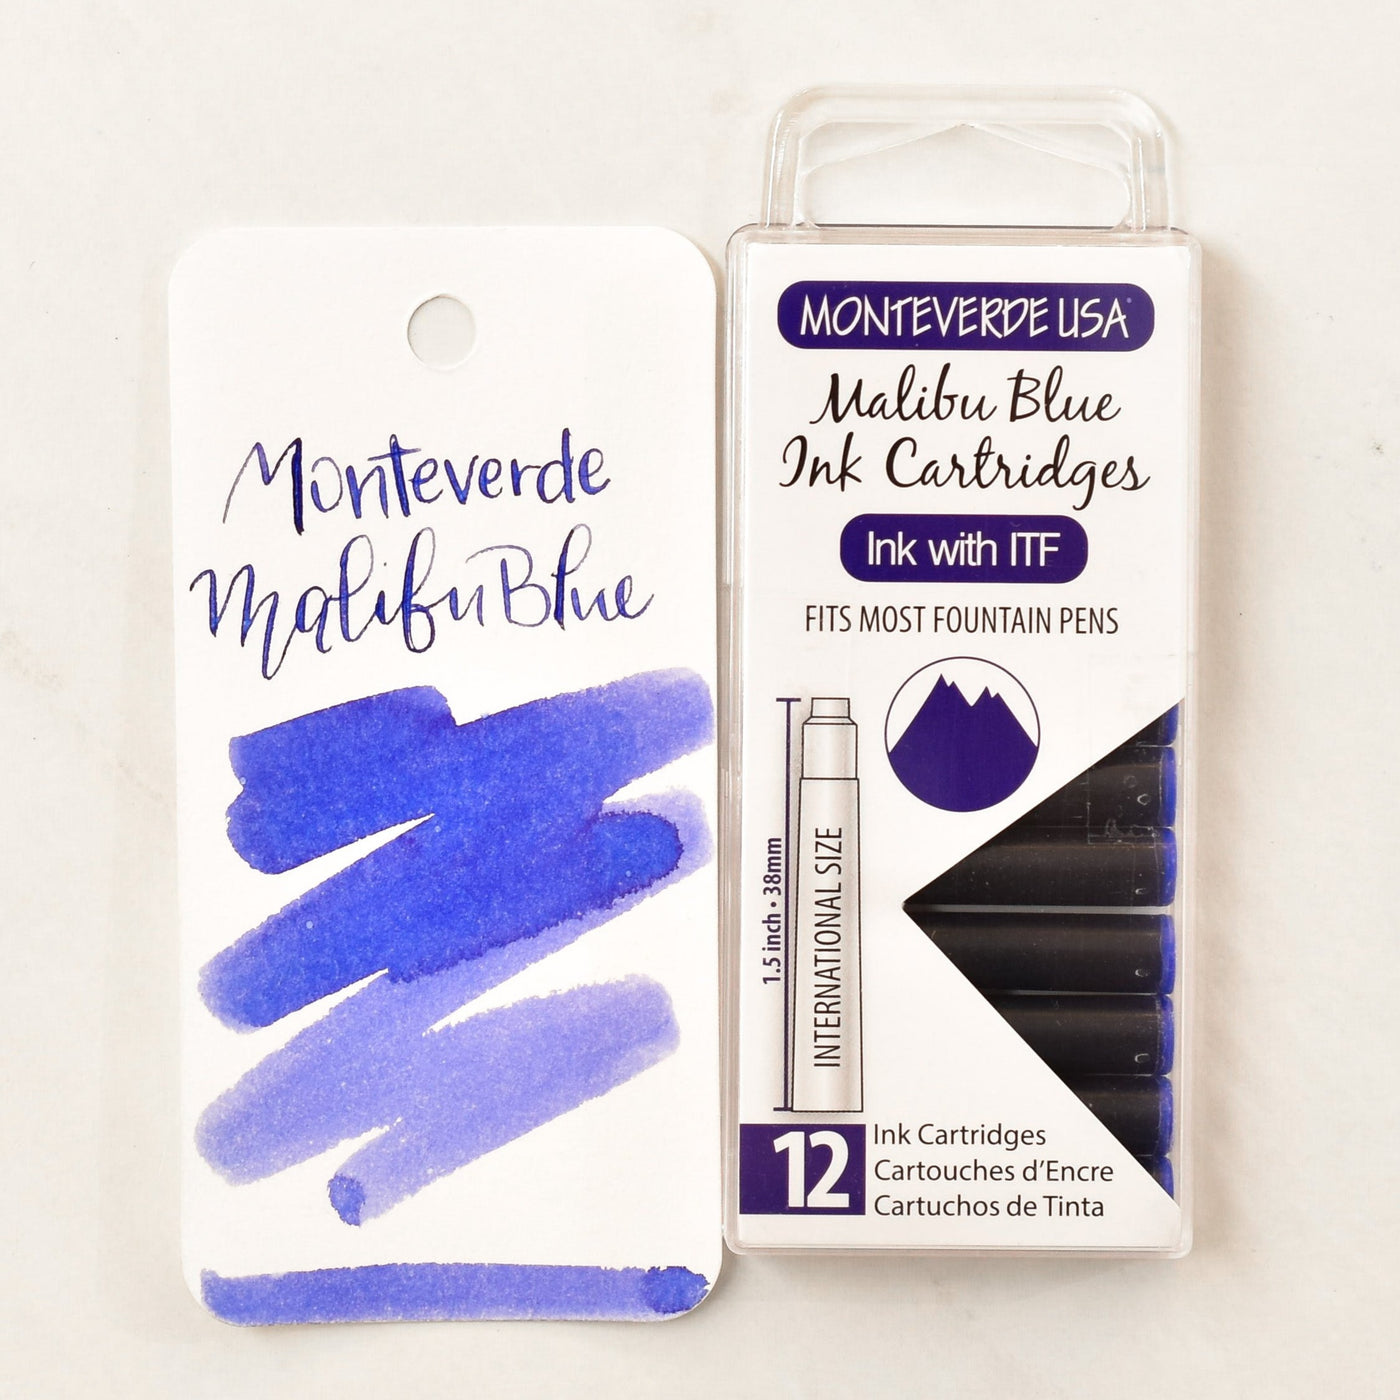 Monteverde Malibu Blue Ink Cartridges